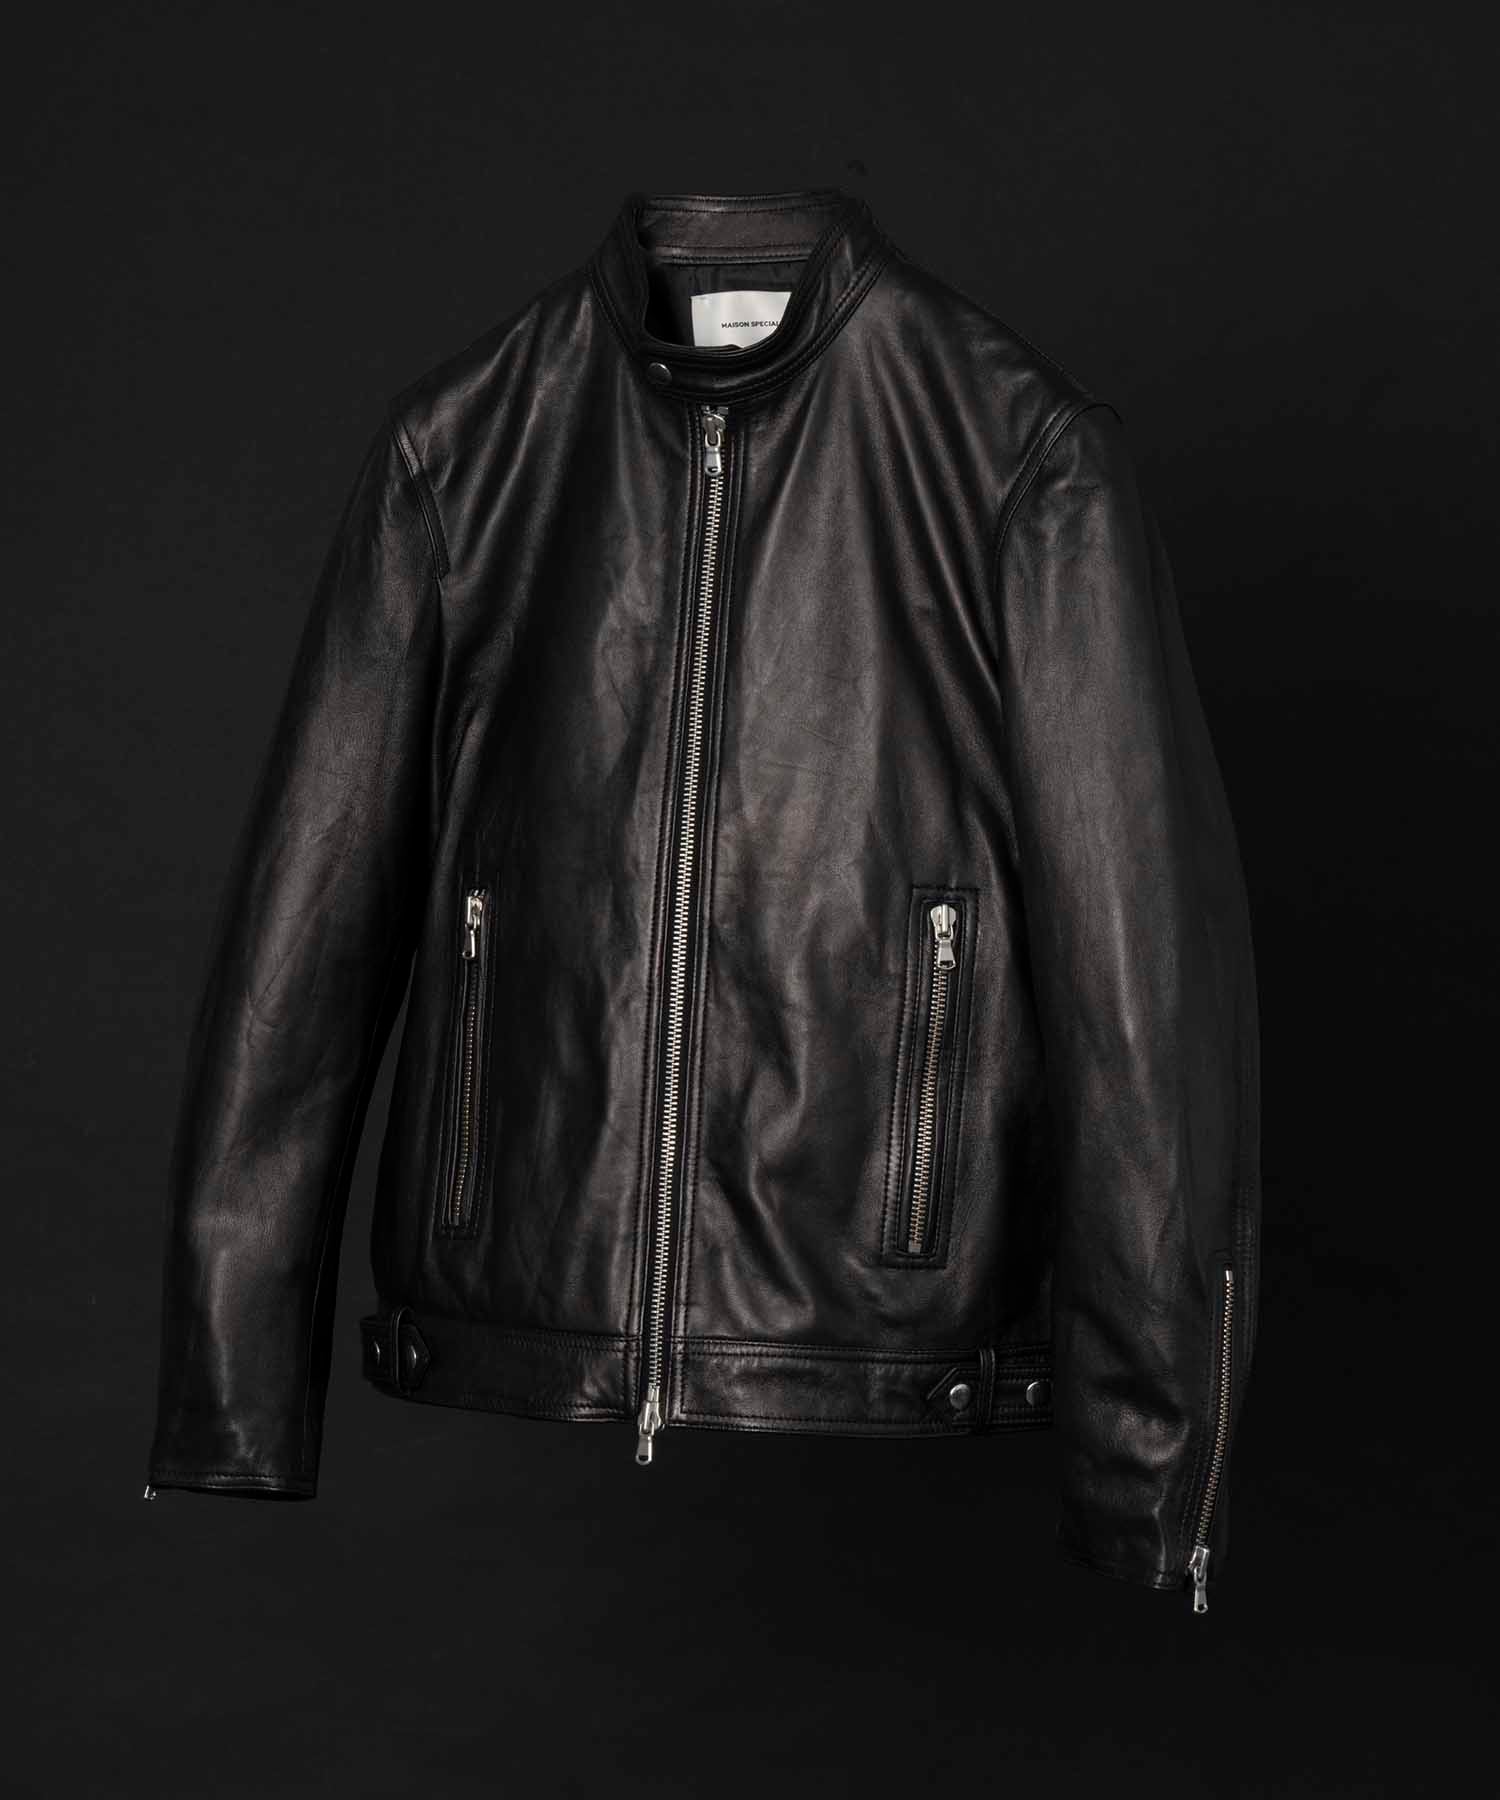 Dress-Fit Sheep Leather Single Rider Jacket